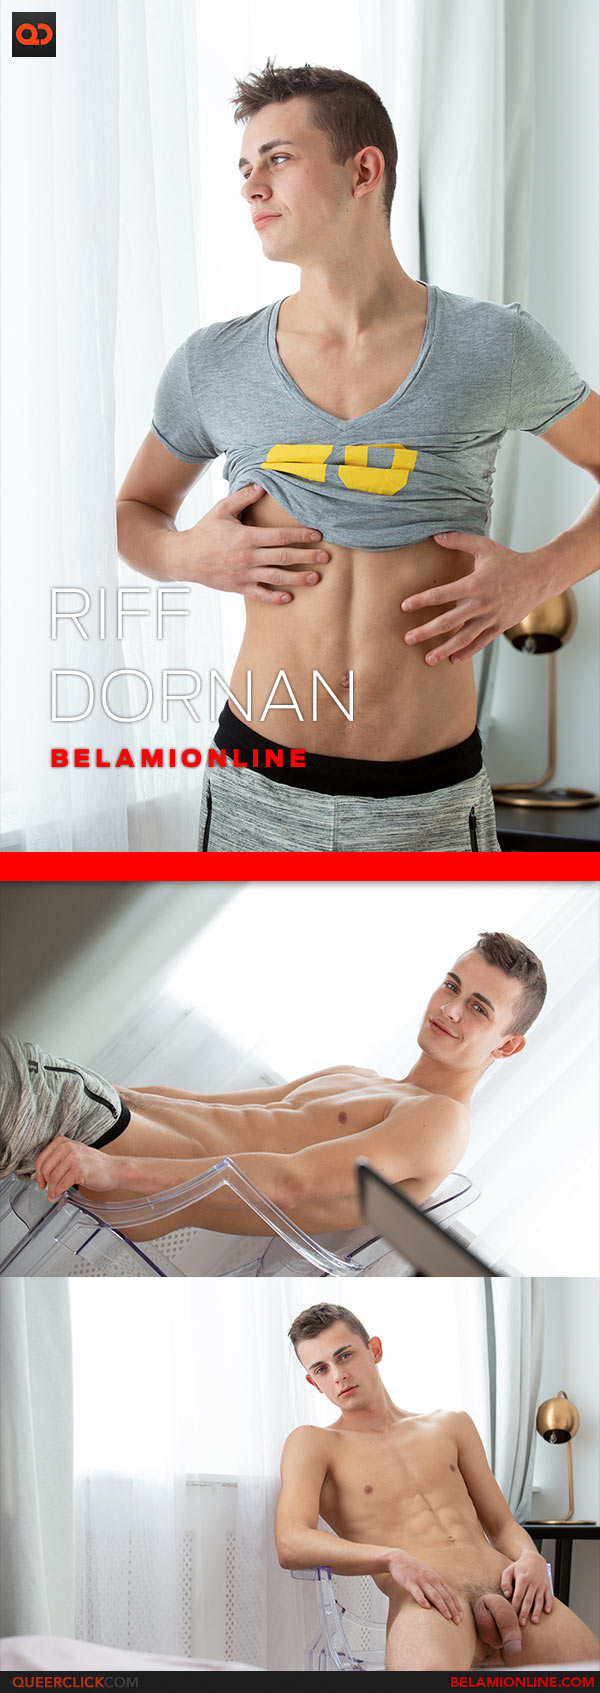 BelAmi Online: Riff Dornan - Pin Ups